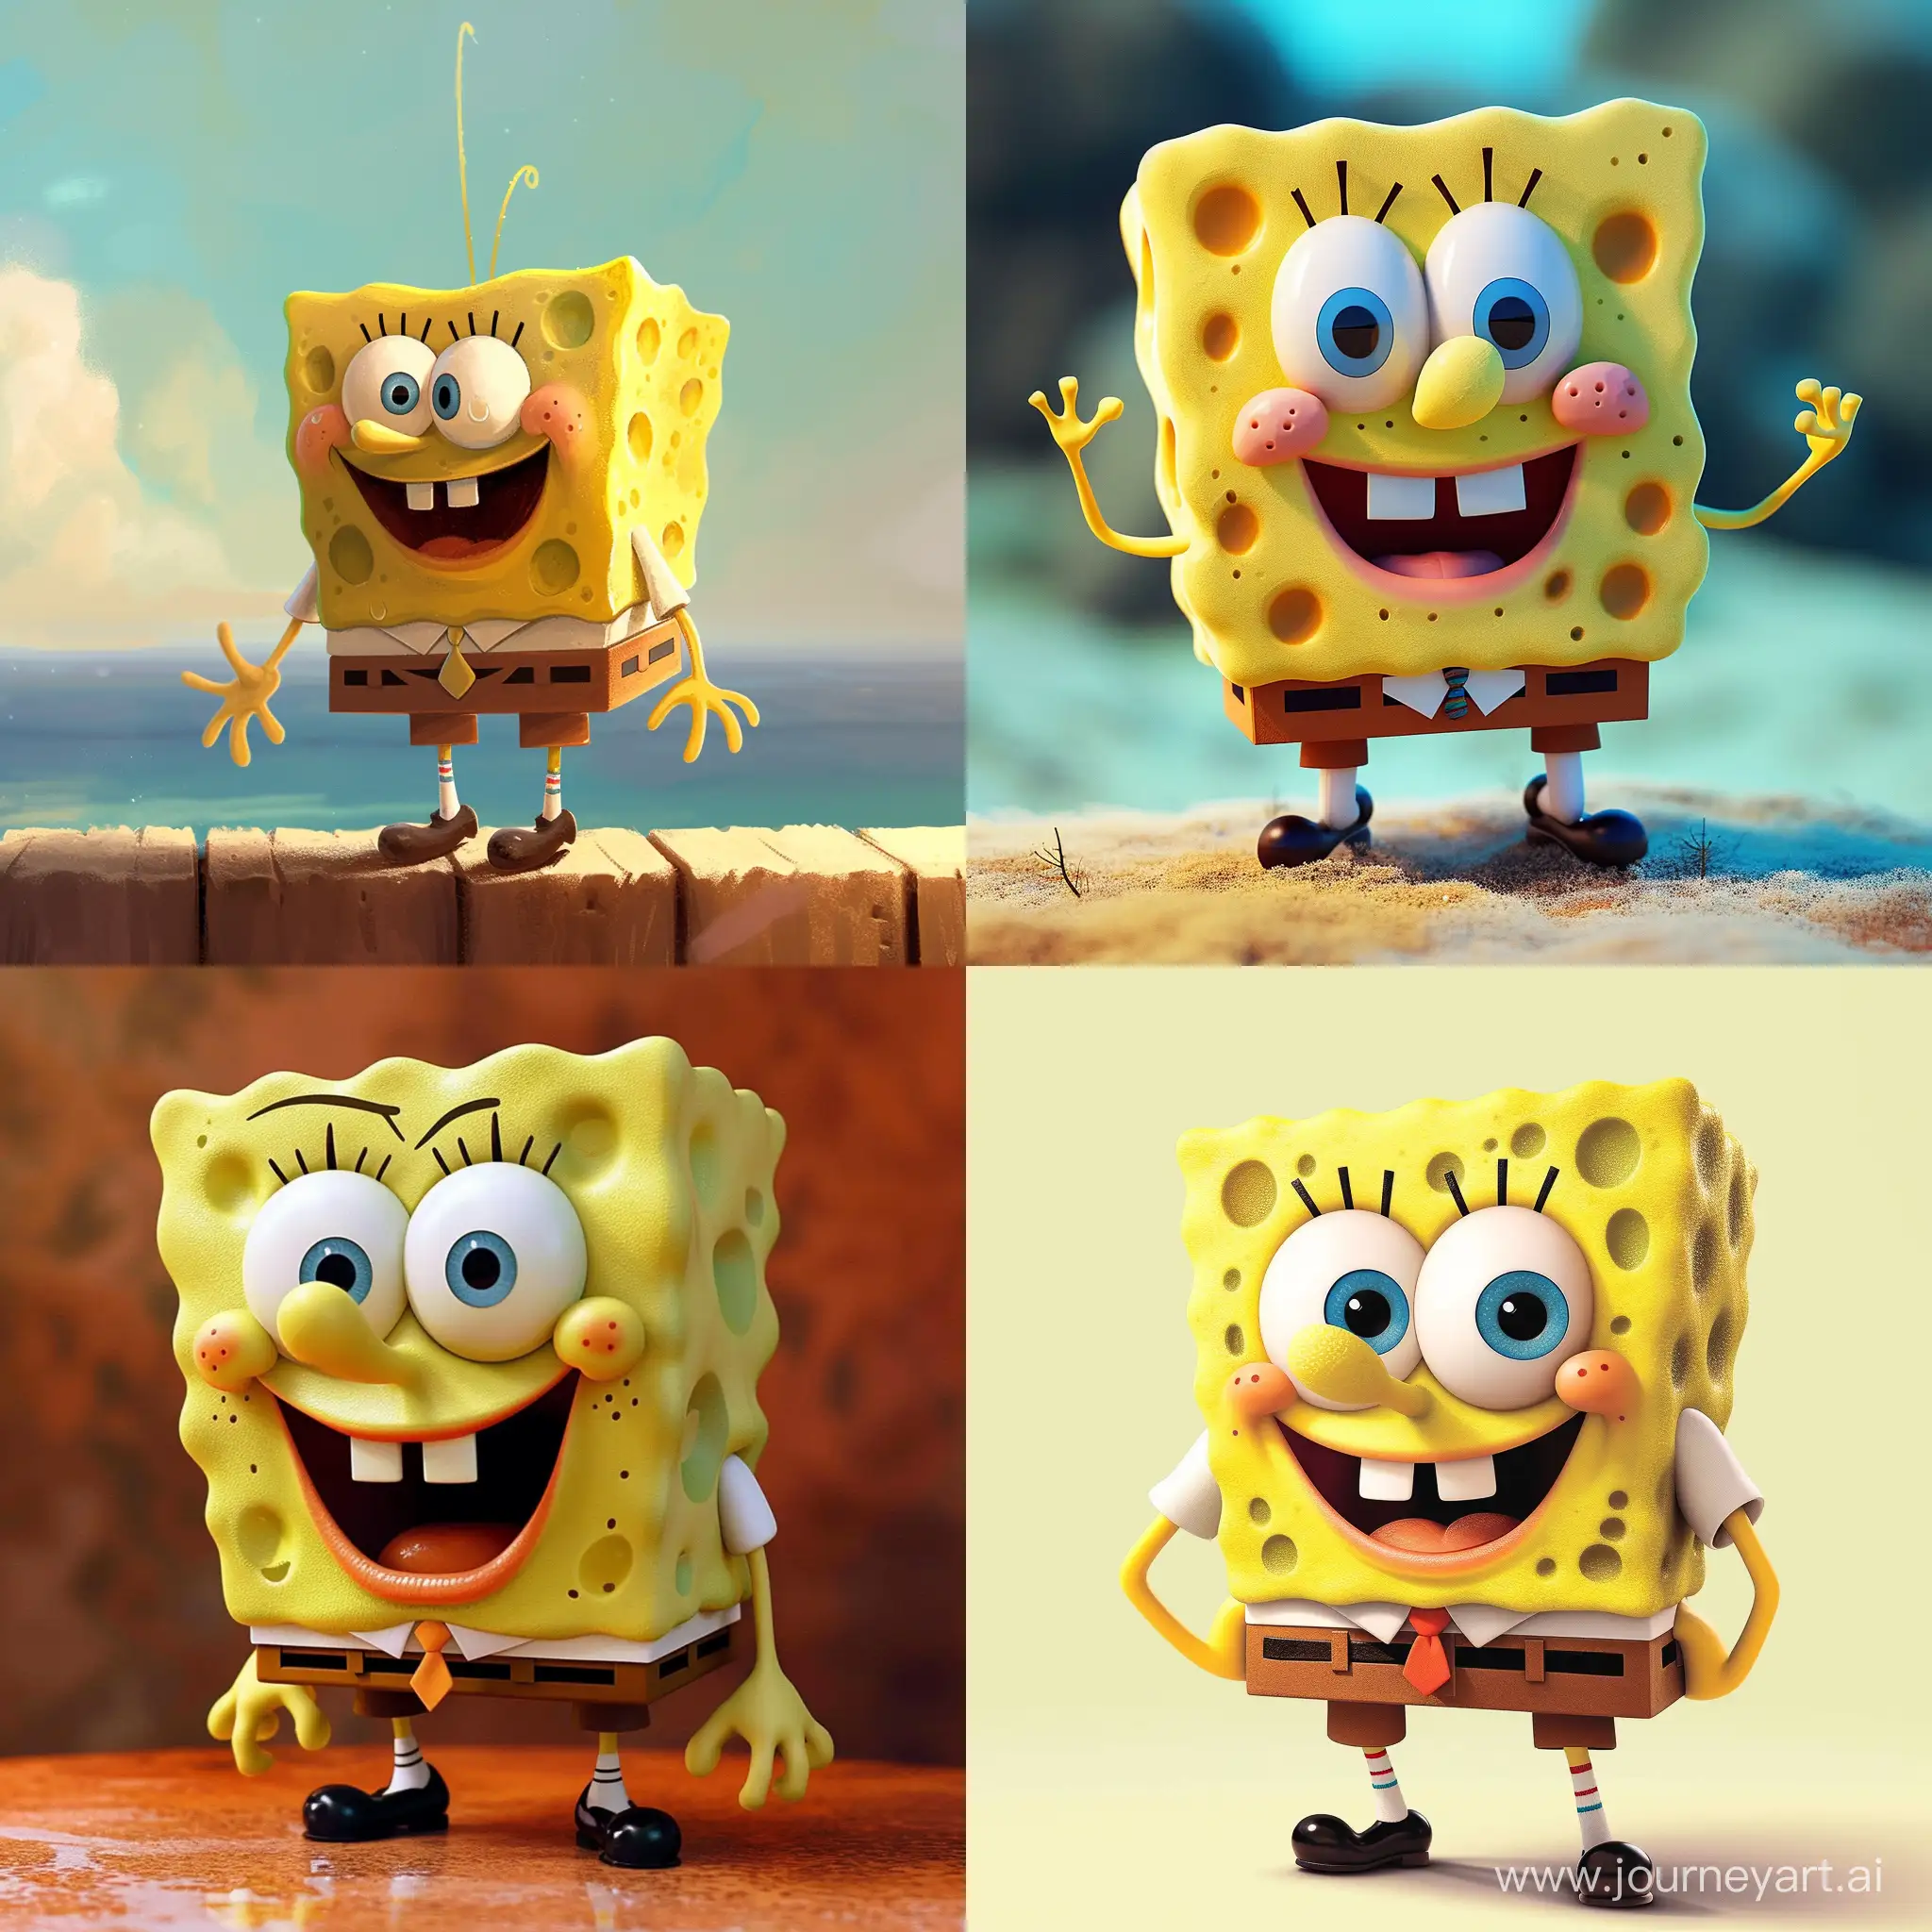 Spongebob-Squarepants-Cartoon-Character-in-Vibrant-3D-Art-Version-6